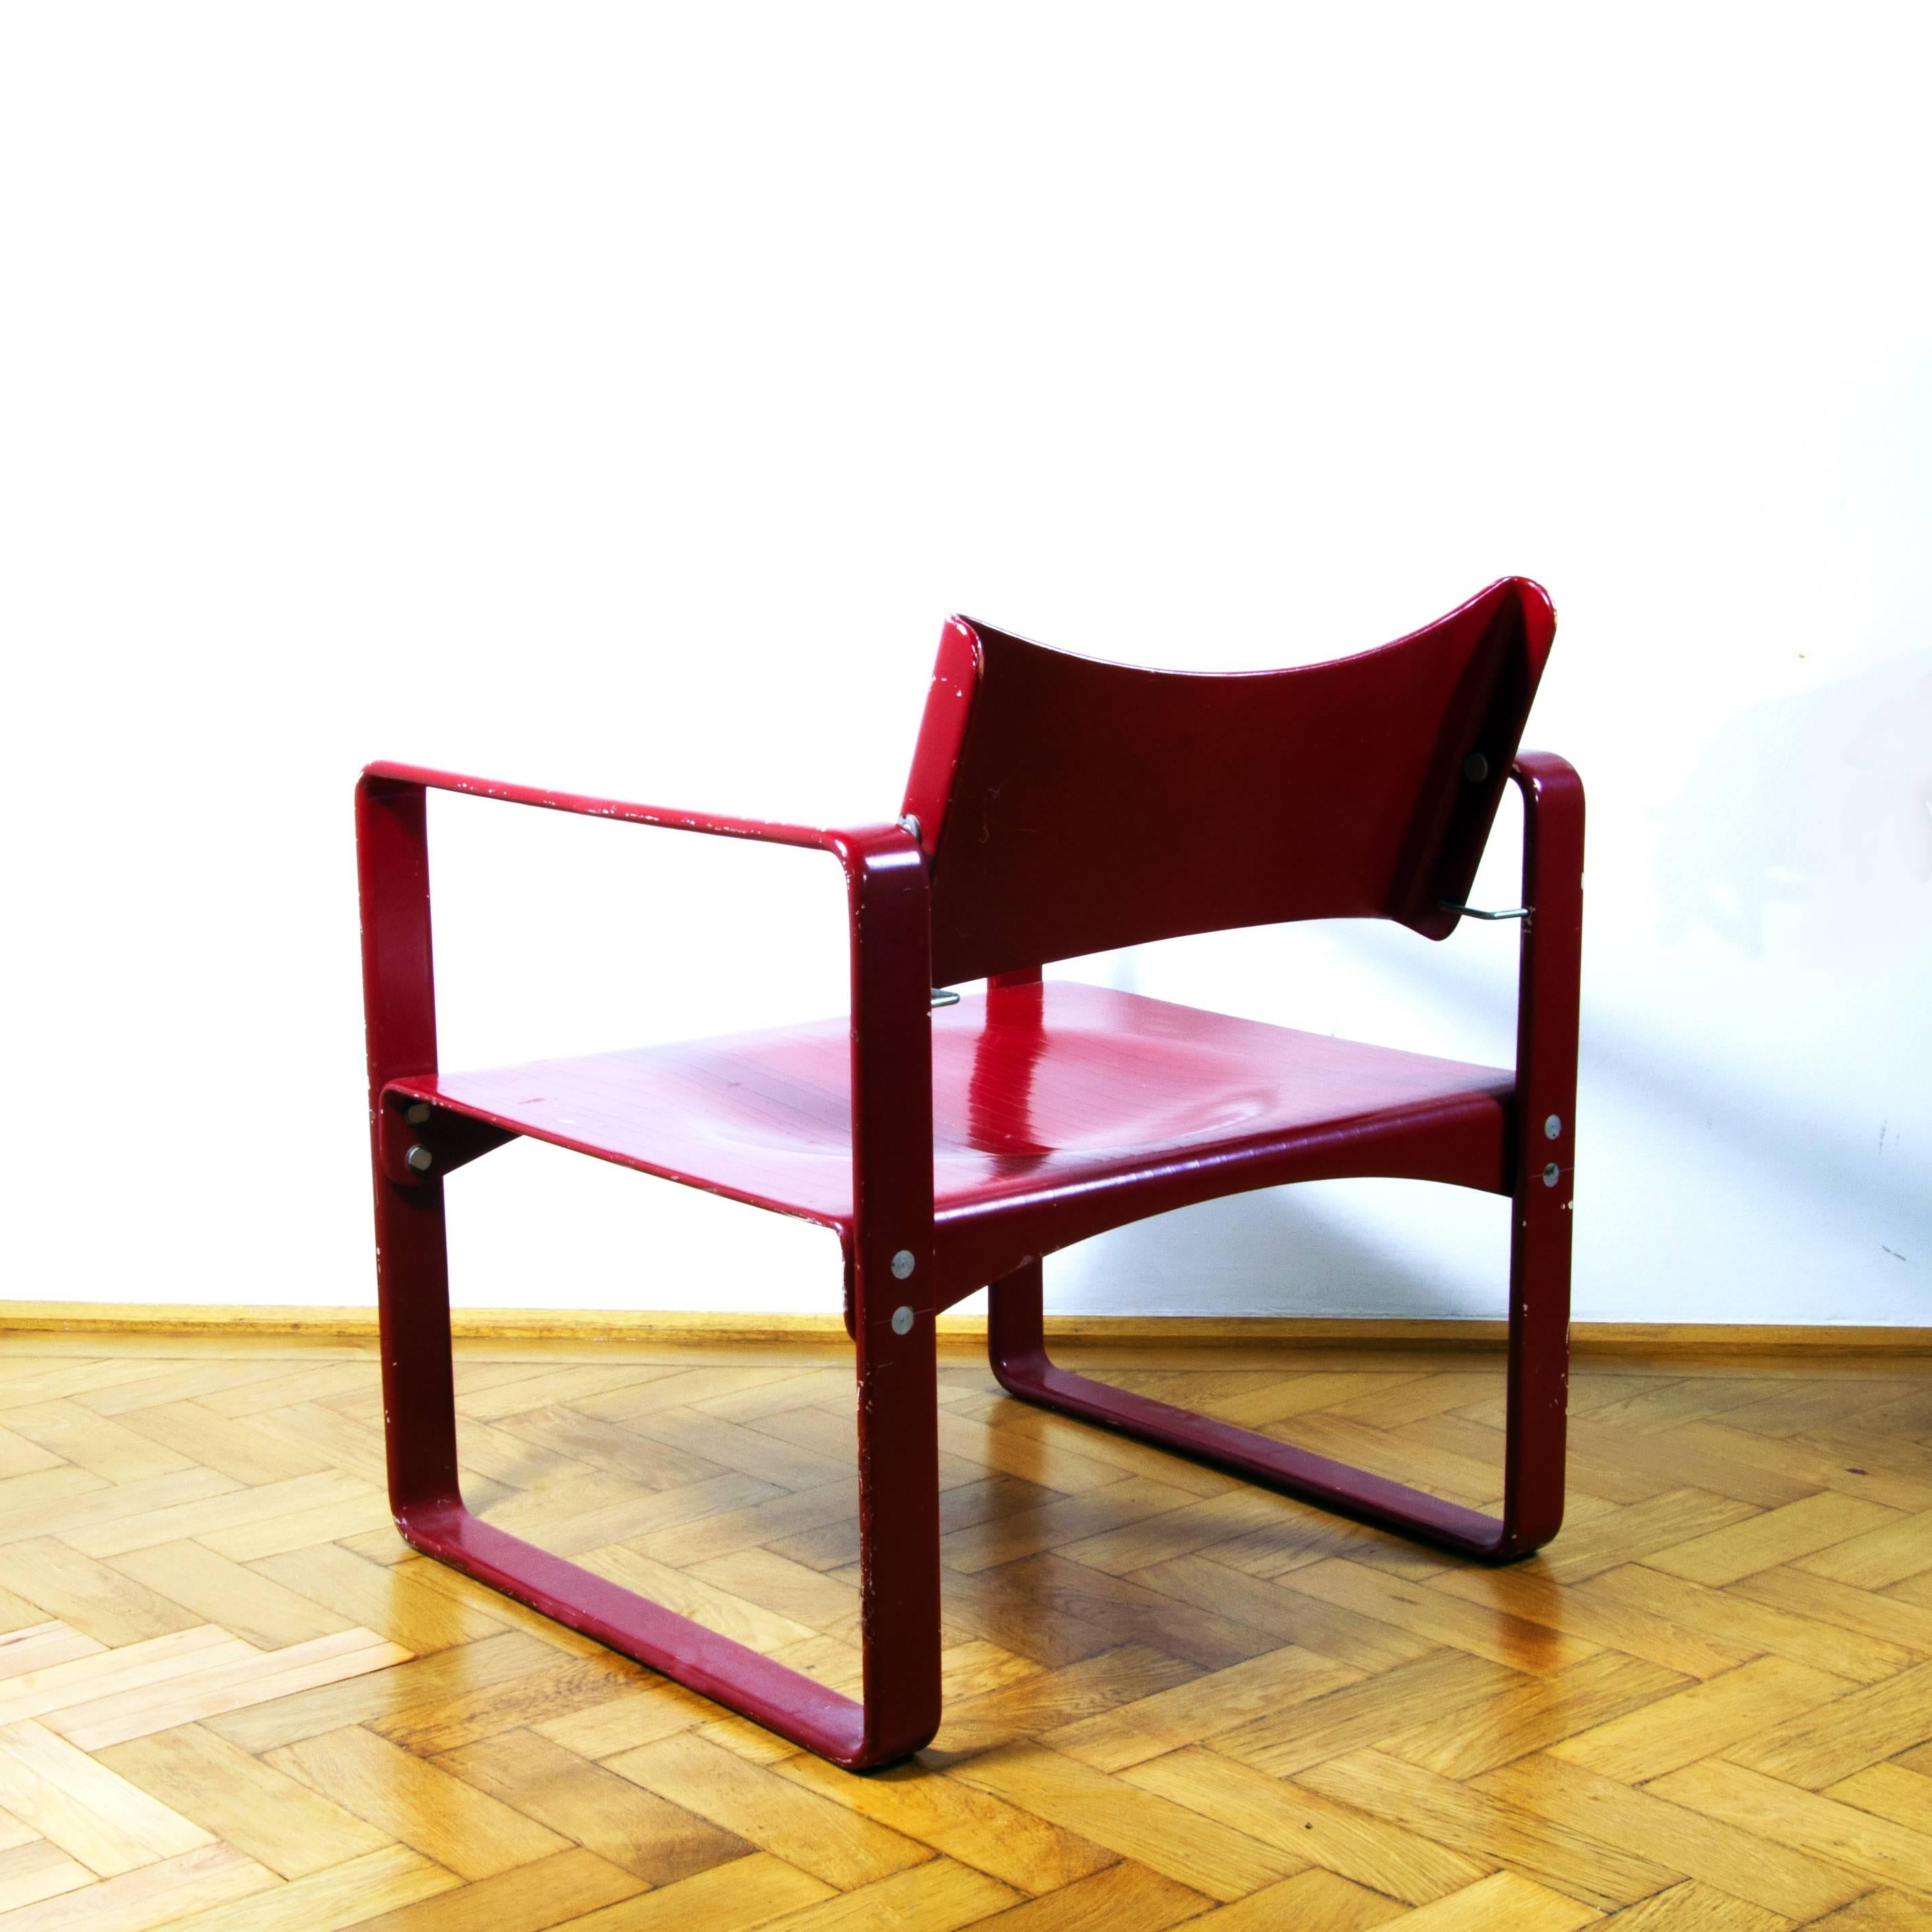 20th Century Verner Panton Lounge Chair Thonet Mod. 270 Designed 1966, Mid-Century Modern For Sale